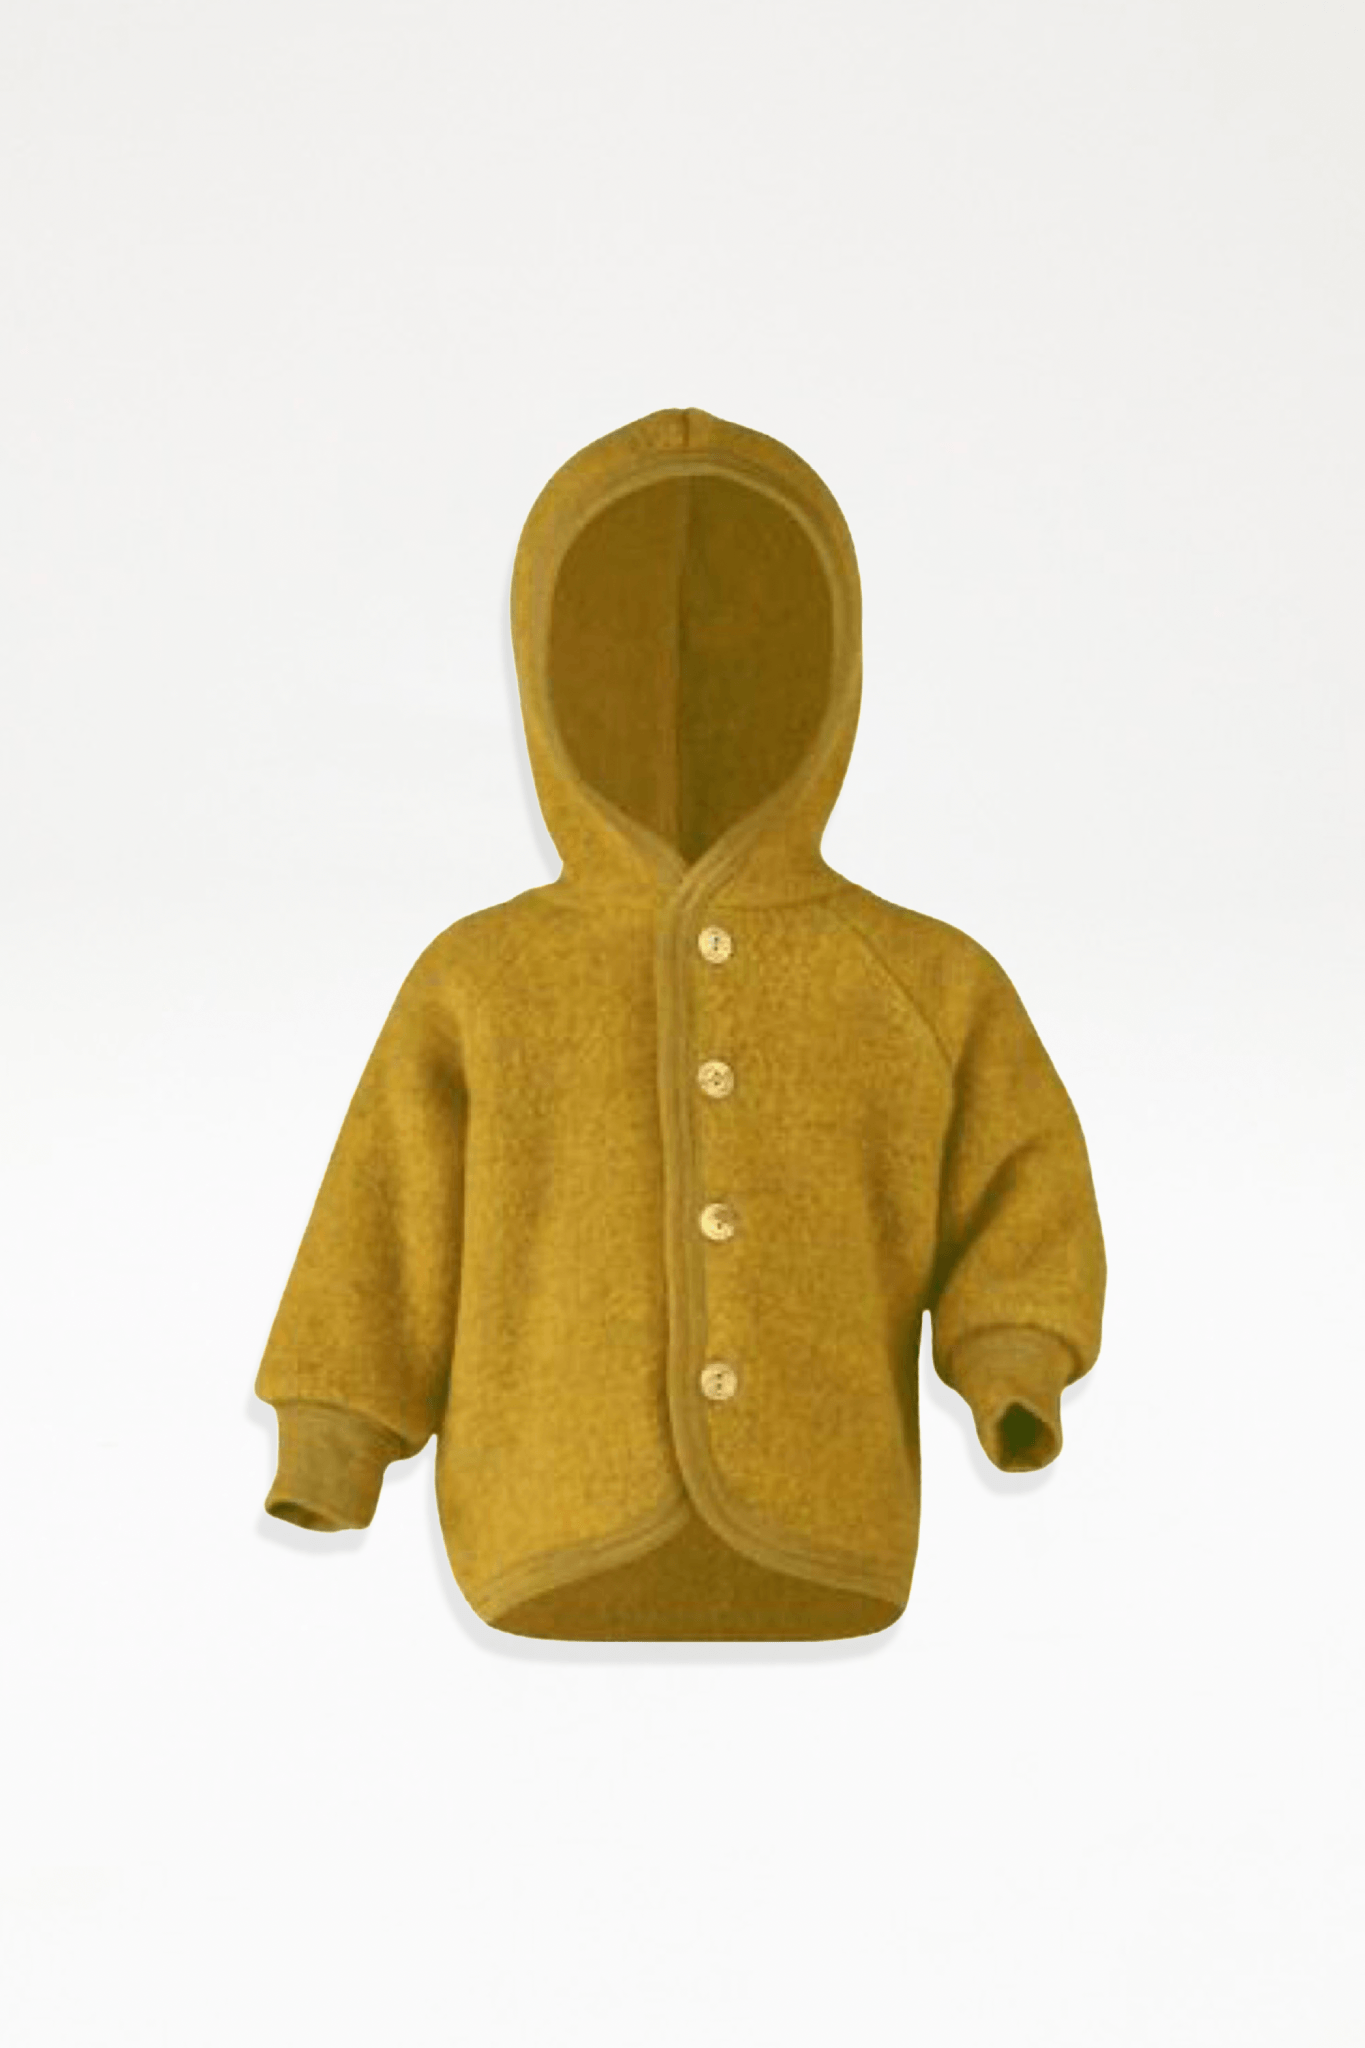 Engel - Baby Organic Wool Jacket - Saffron Melange - Ensemble Studios